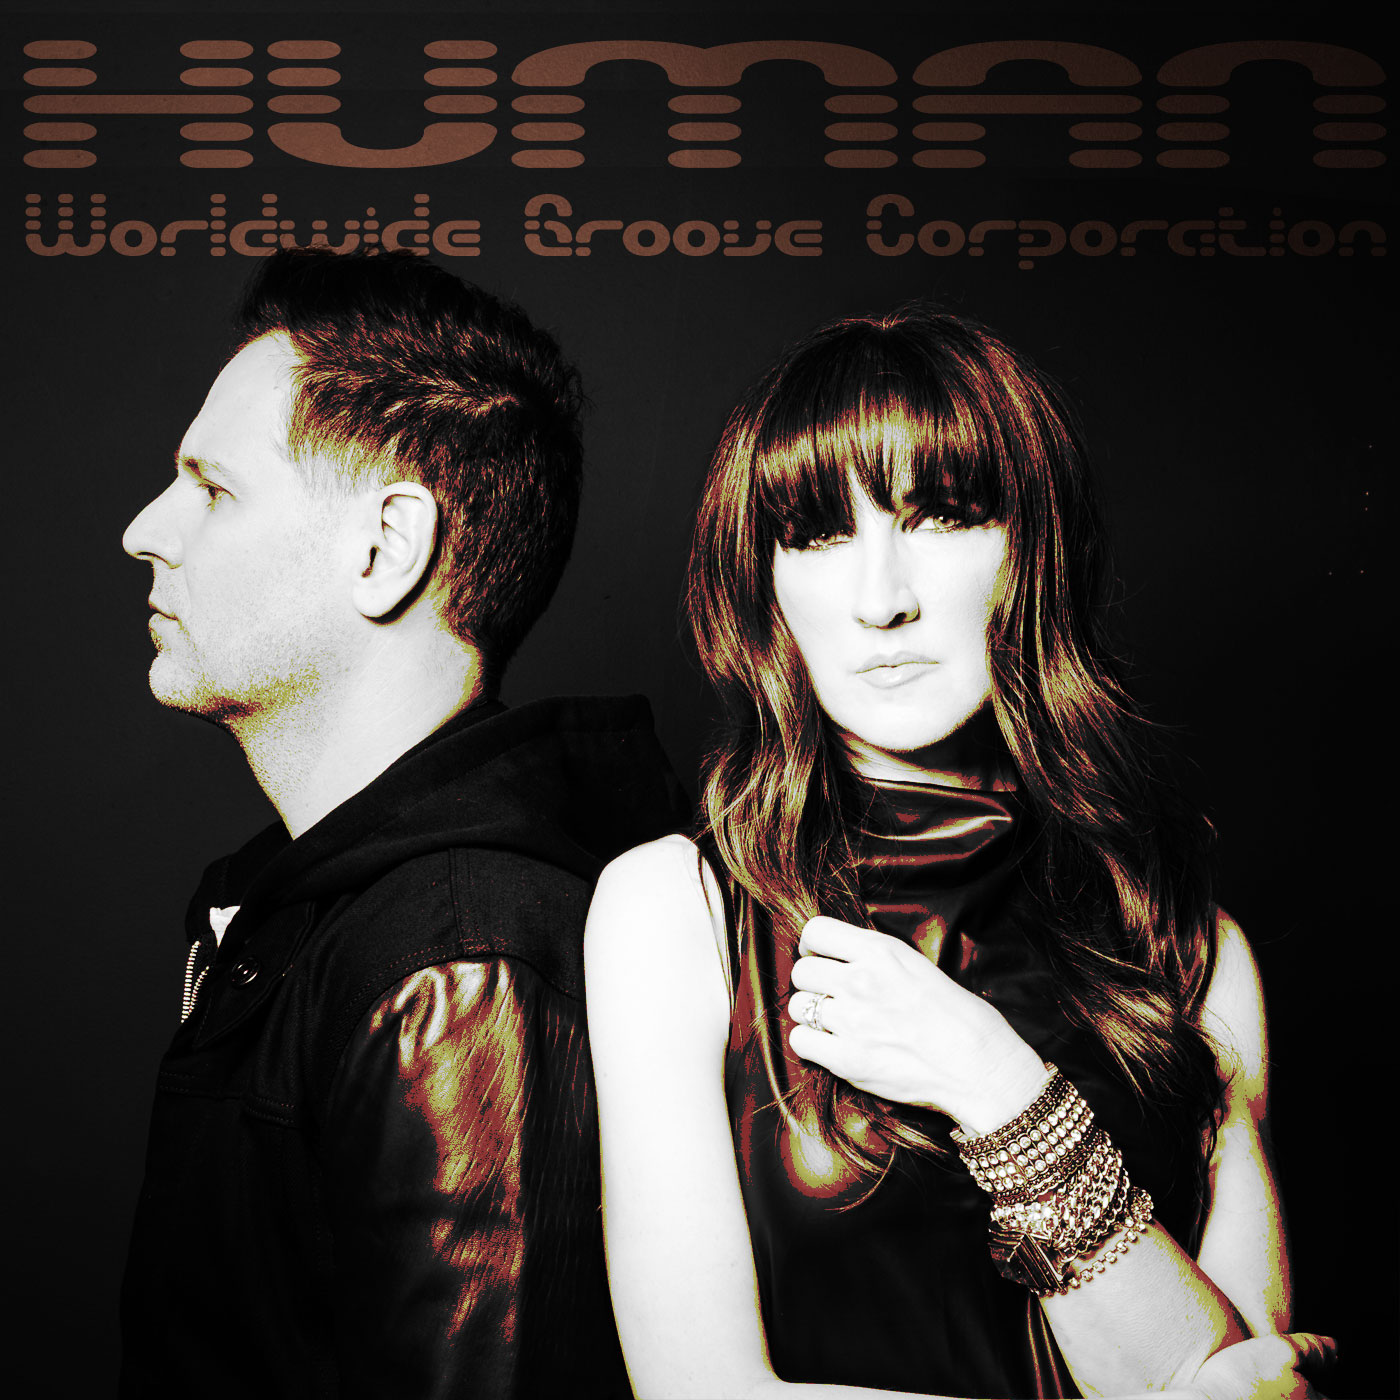  Worldwide Groove Corporation – “Human”